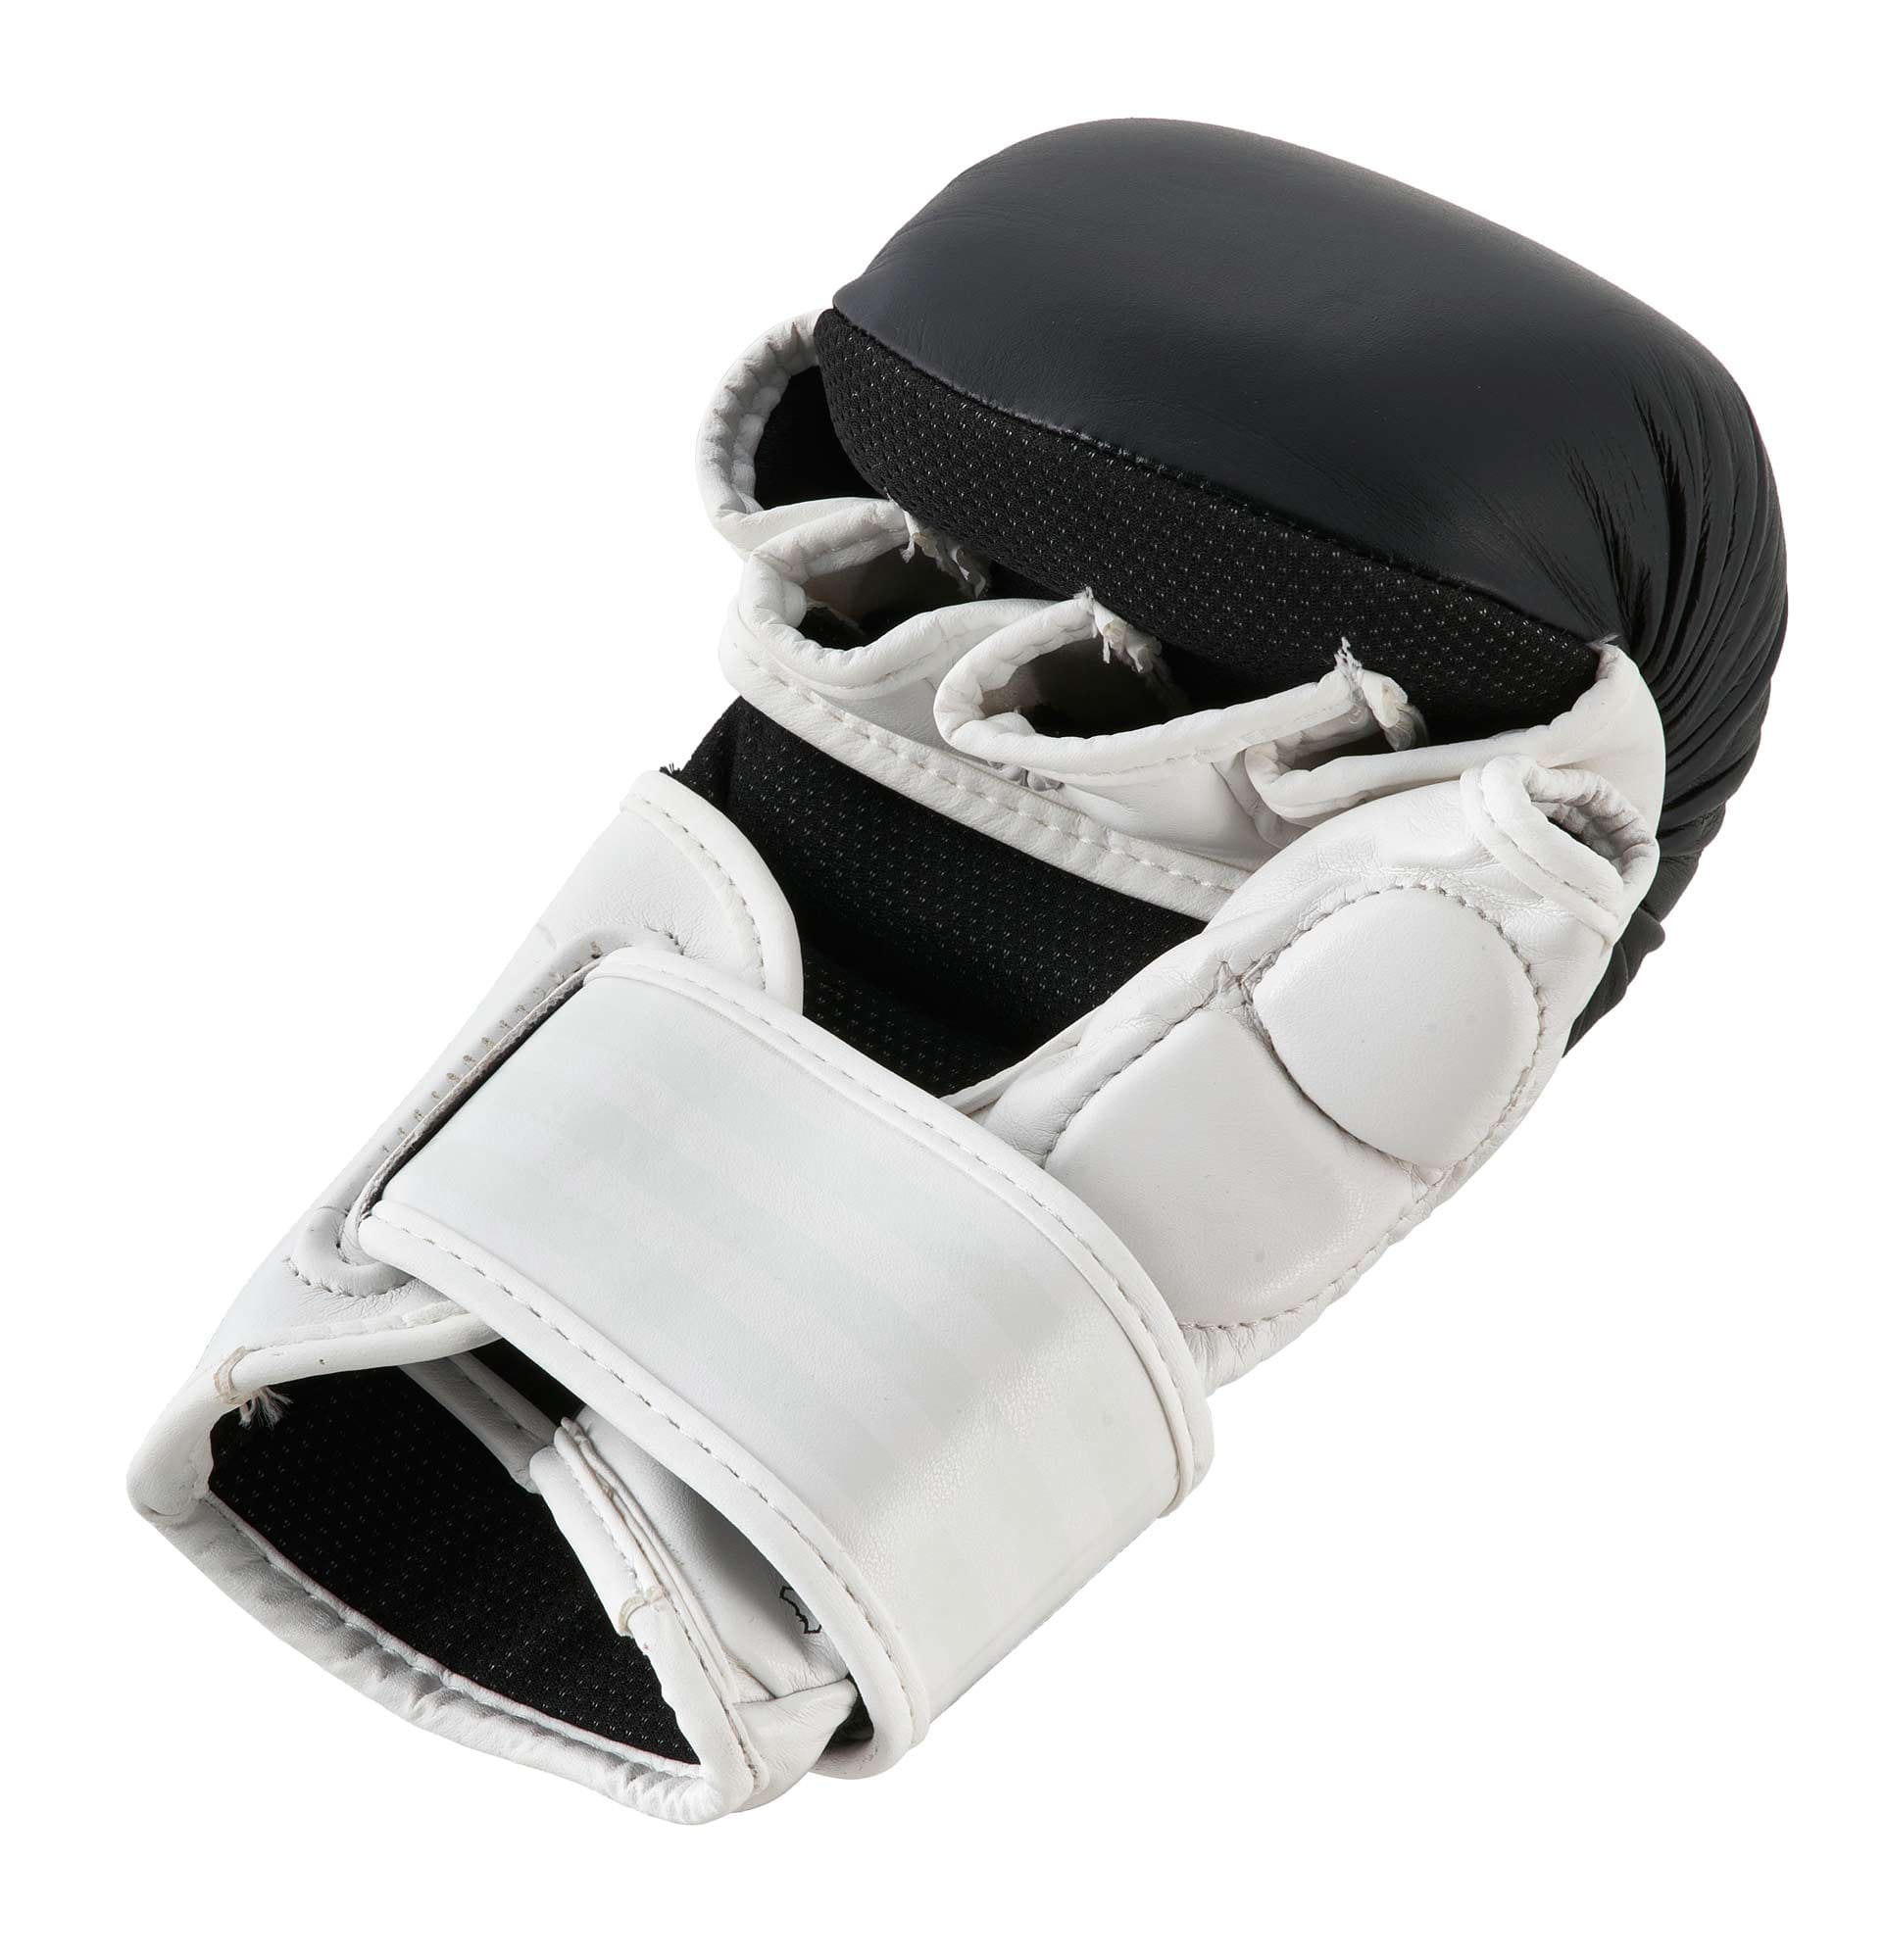 Buy Adidas MMA Sparring Gloves Black/White Shop - Fight Online emparor ✓